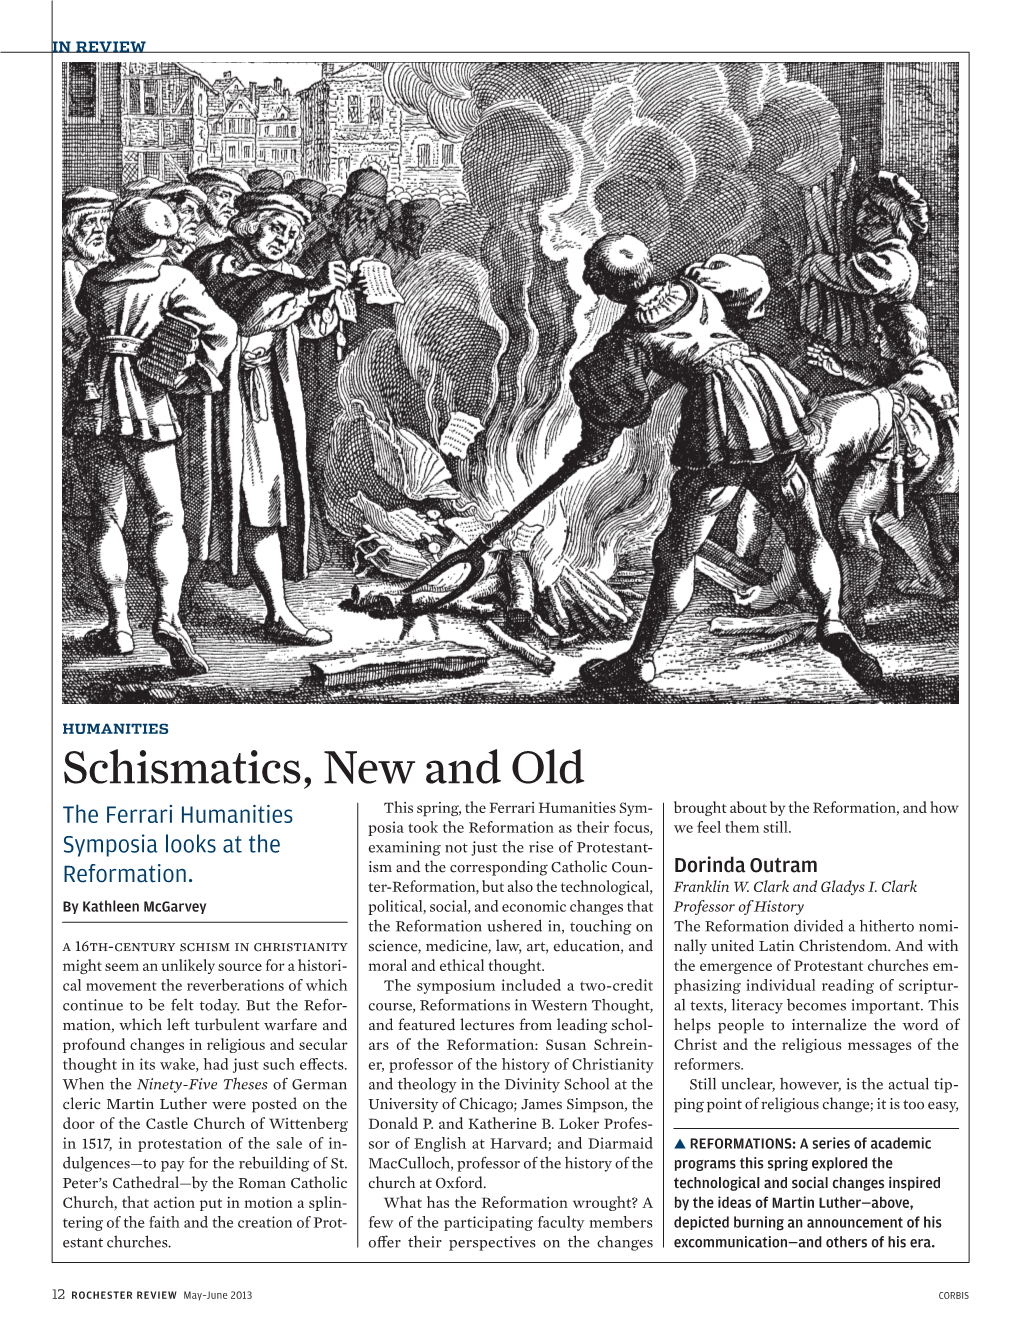 Schismatics, New And